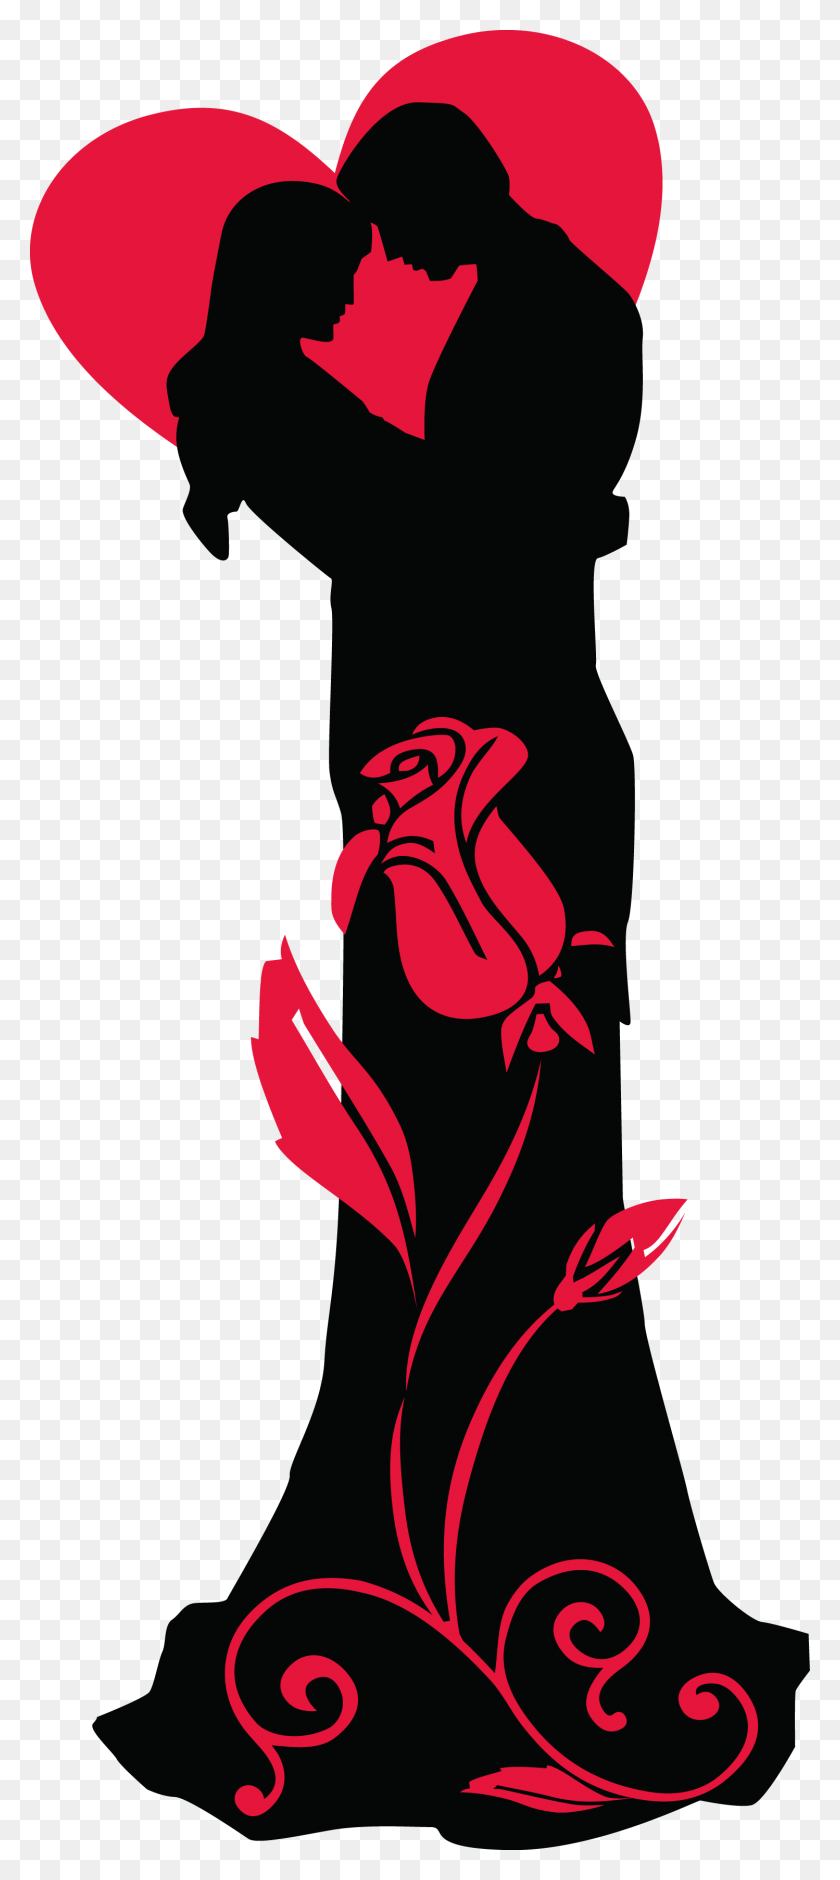 1498x3497 Silueta De Pareja Amorosa Transparente Con Corazón Rojo Y Rosa Png - Silueta De Rosa Png